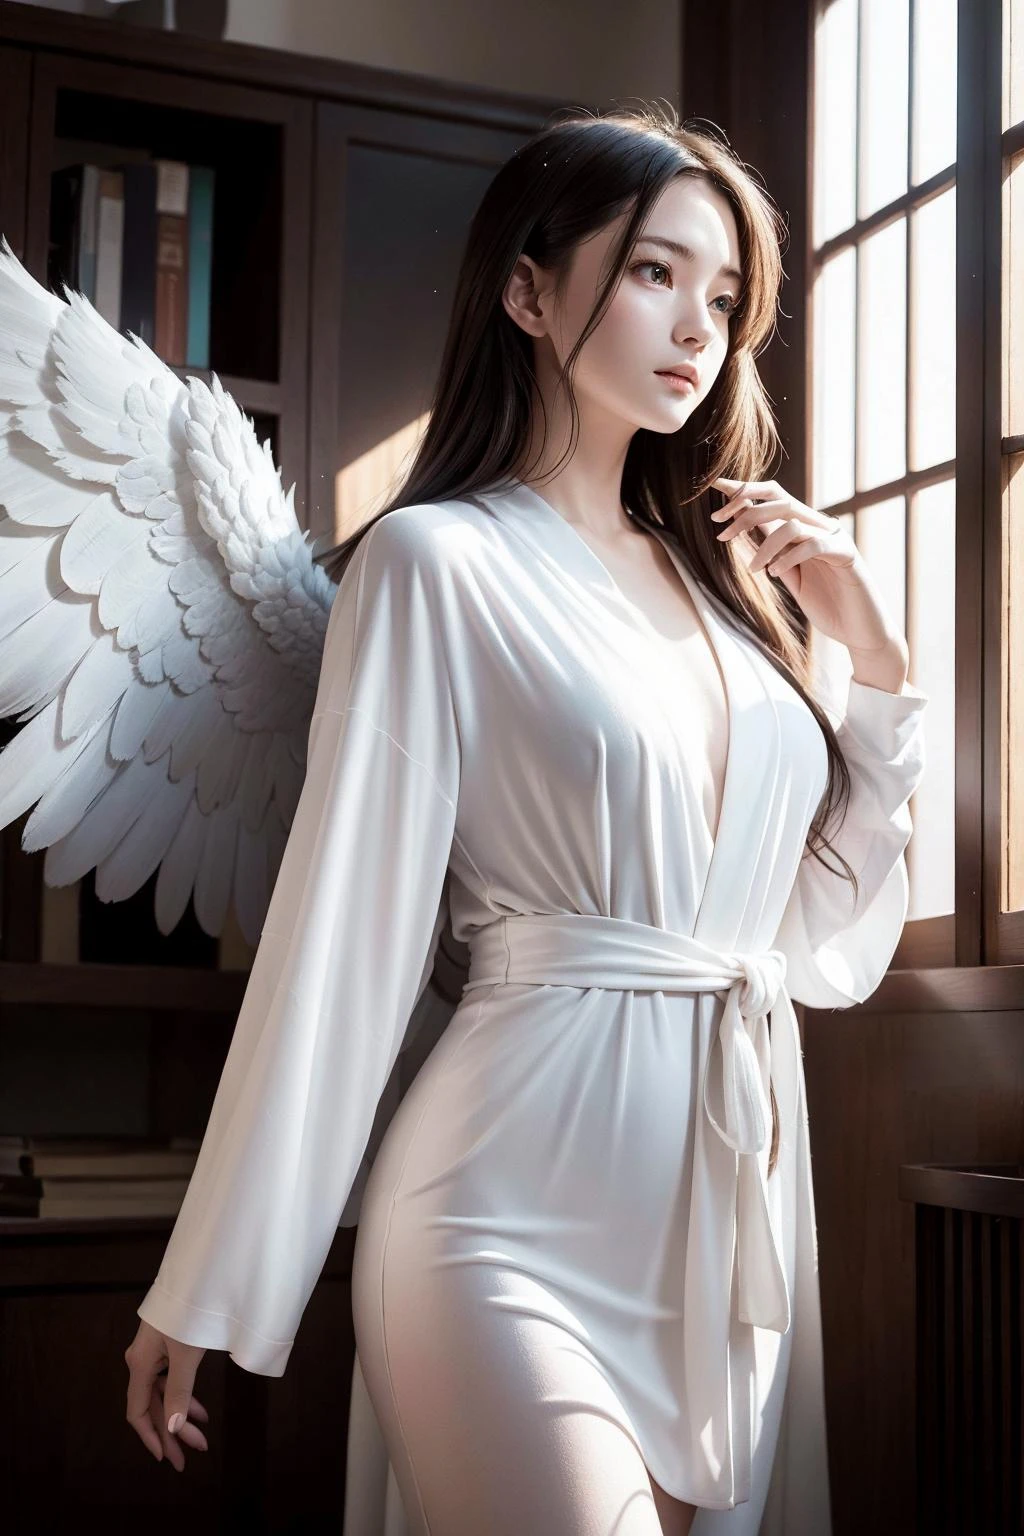 (photo realistic:1.2), cute girl
BREAK
dynamic angle, angel, uplight, classic robe, magical effect,